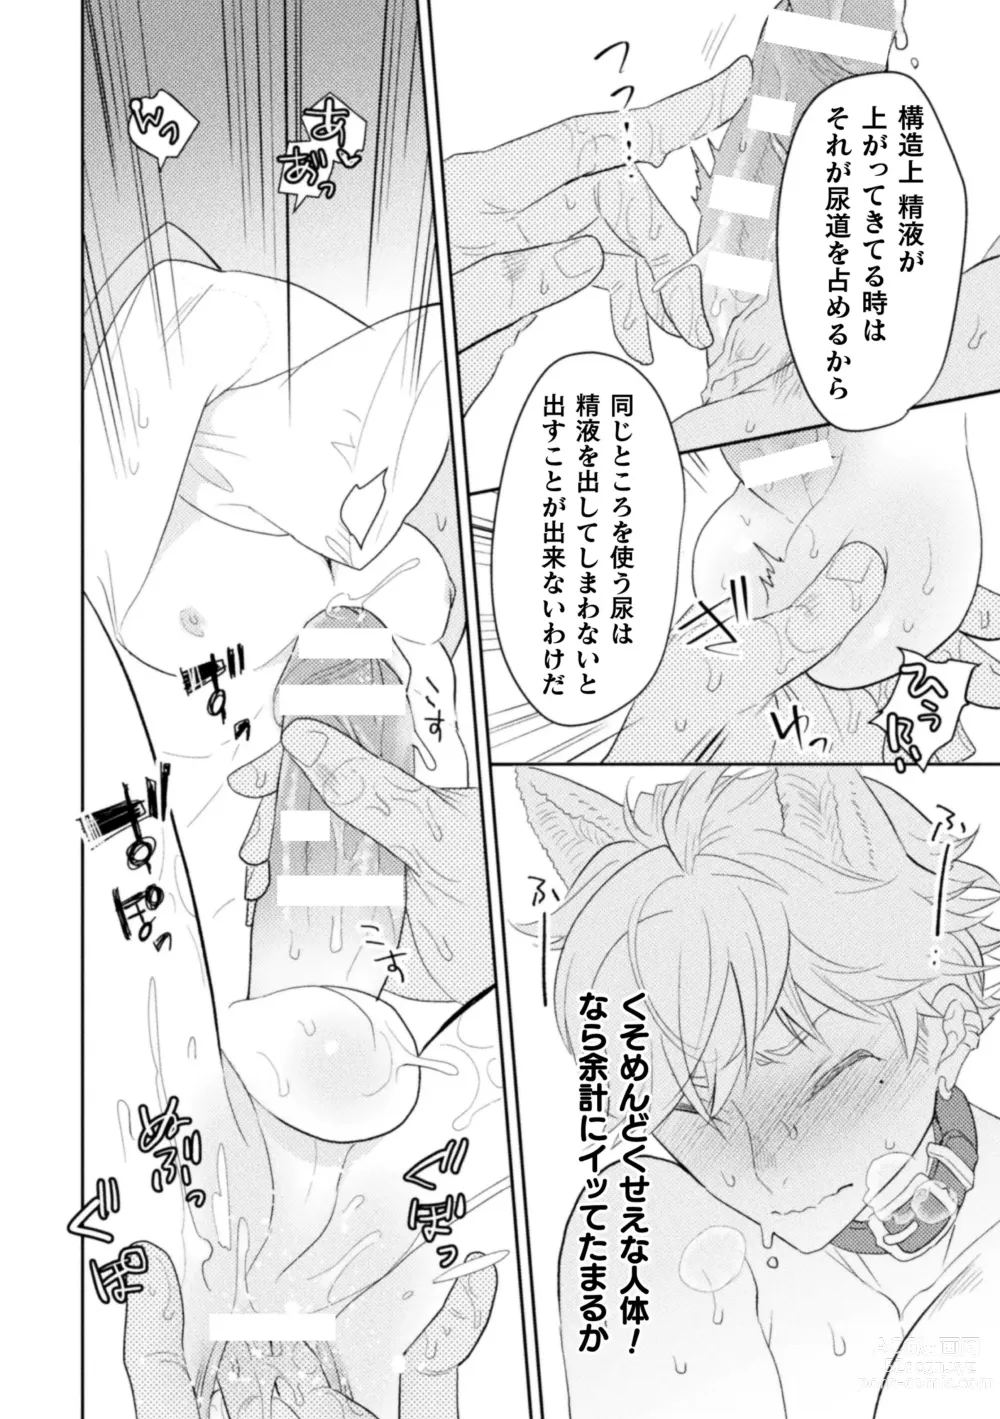 Page 14 of manga Zekkai Rougoku 5 Eien no Rougoku Zenpen